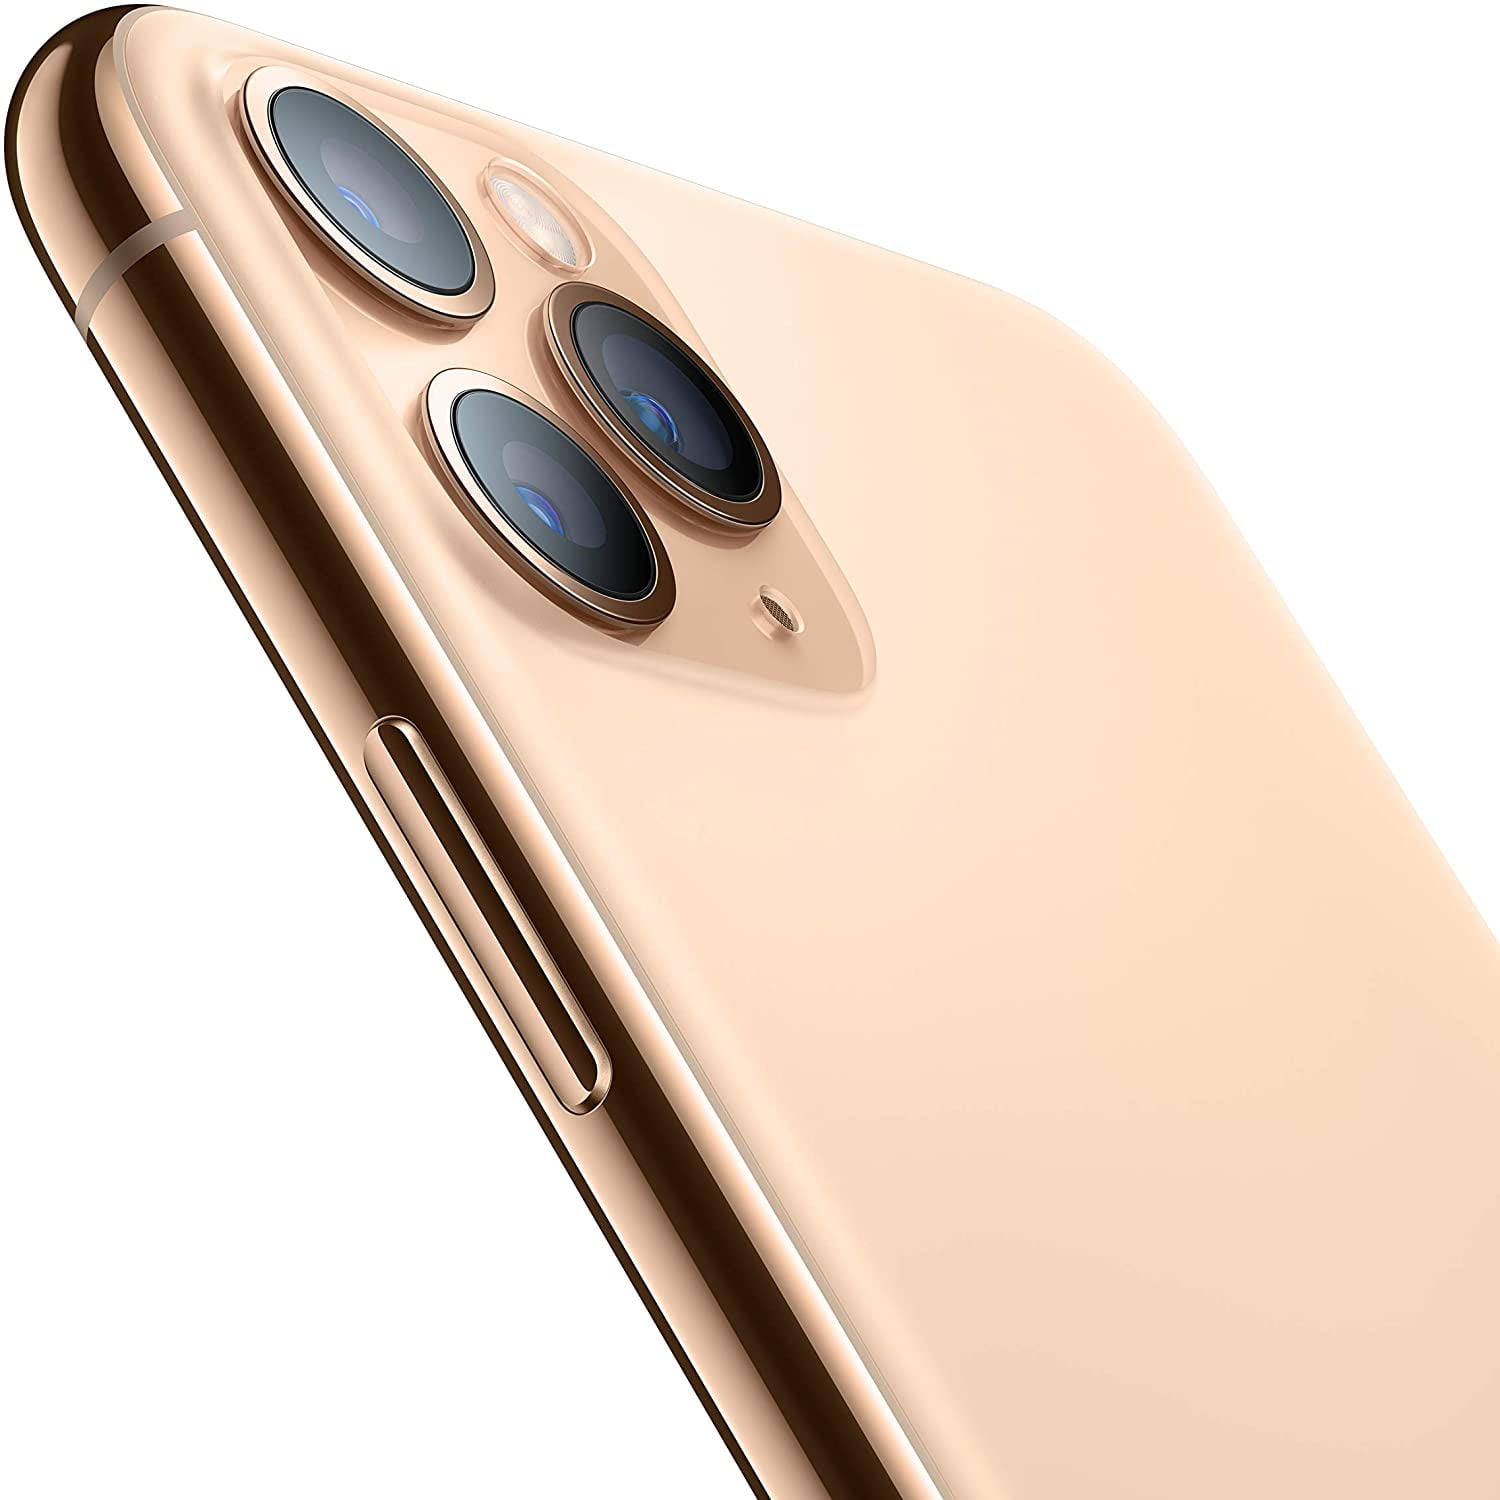 Apple iPhone 11 Pro Max 256GB, Gold - Unlocked